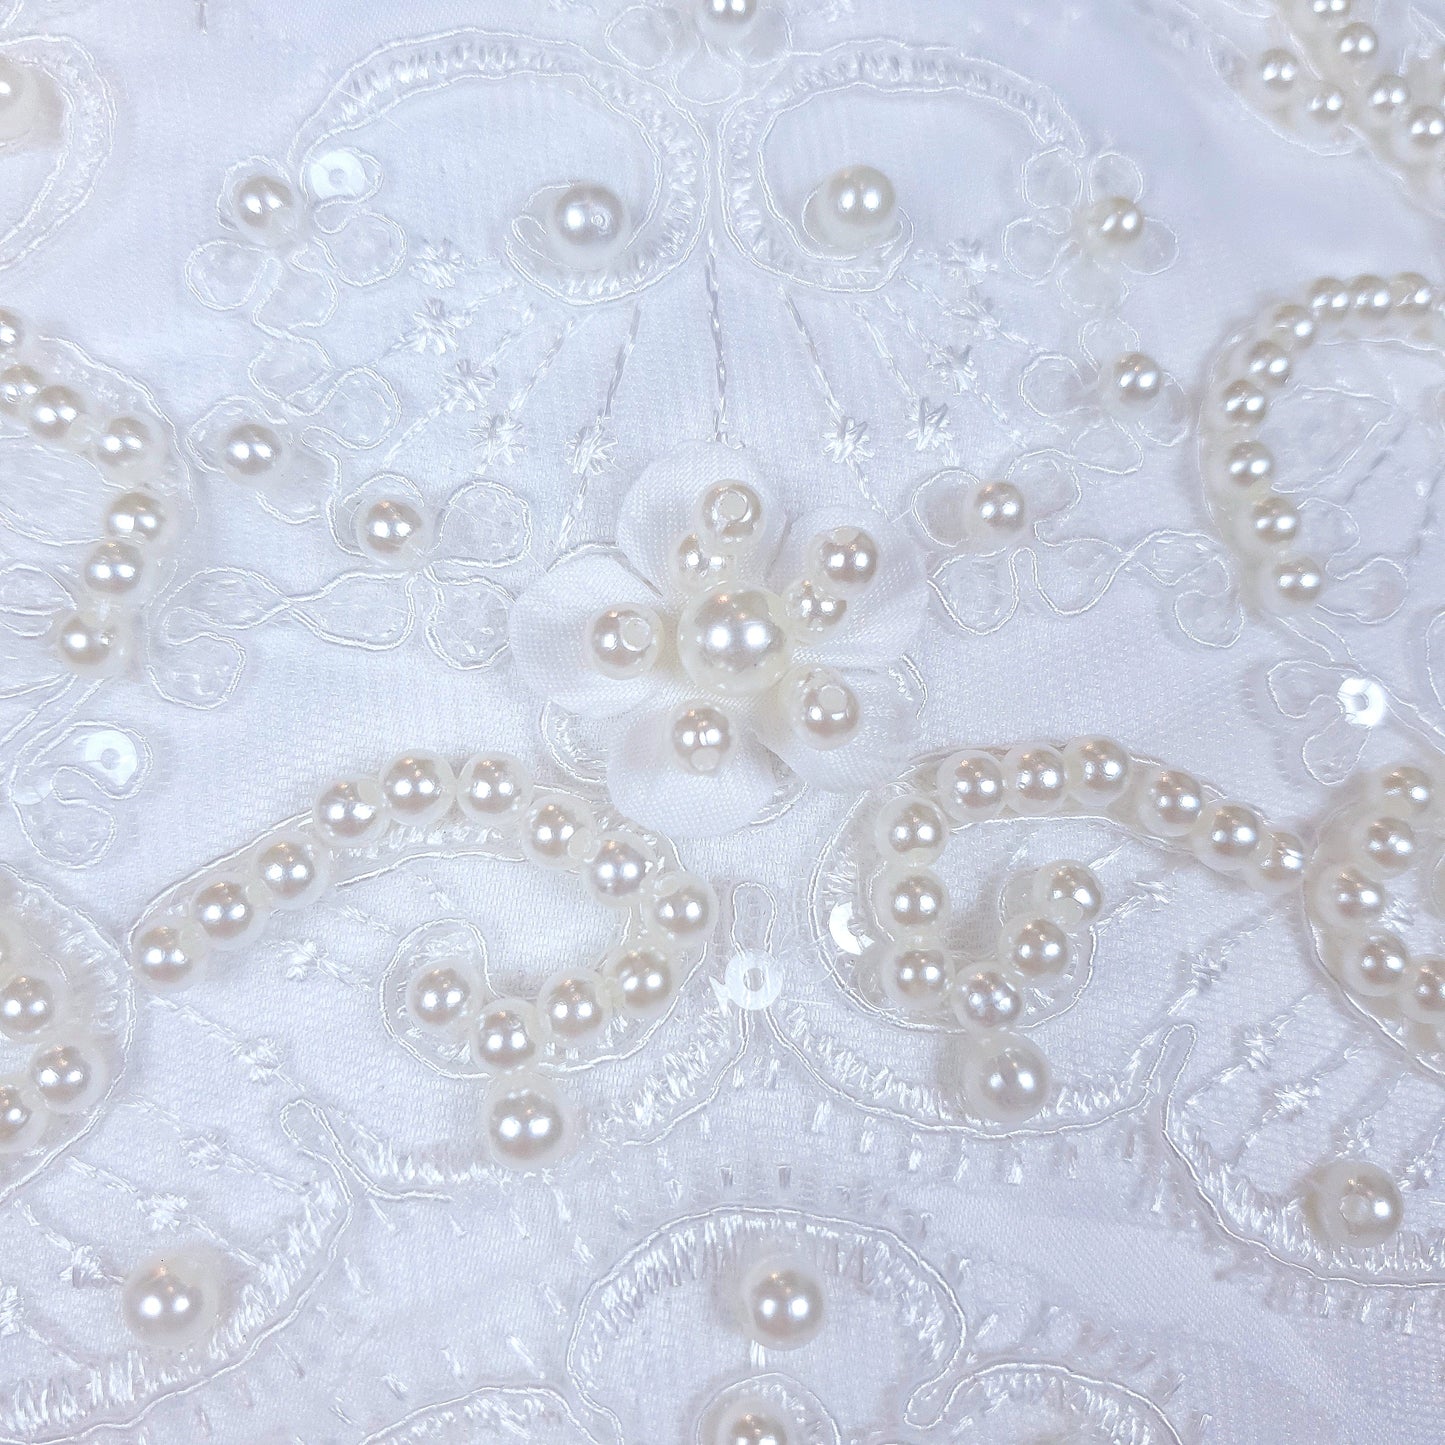 Elegant beaded bodice layered tulle off-white dress